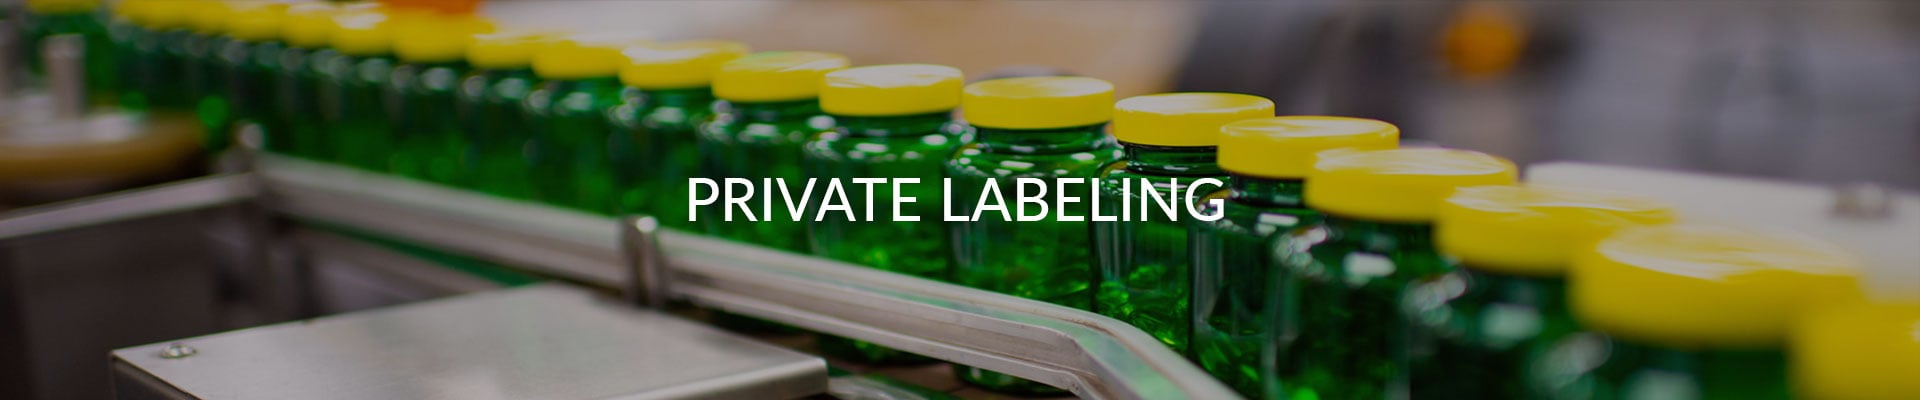 Private Labeling Robinson Pharma, Inc.